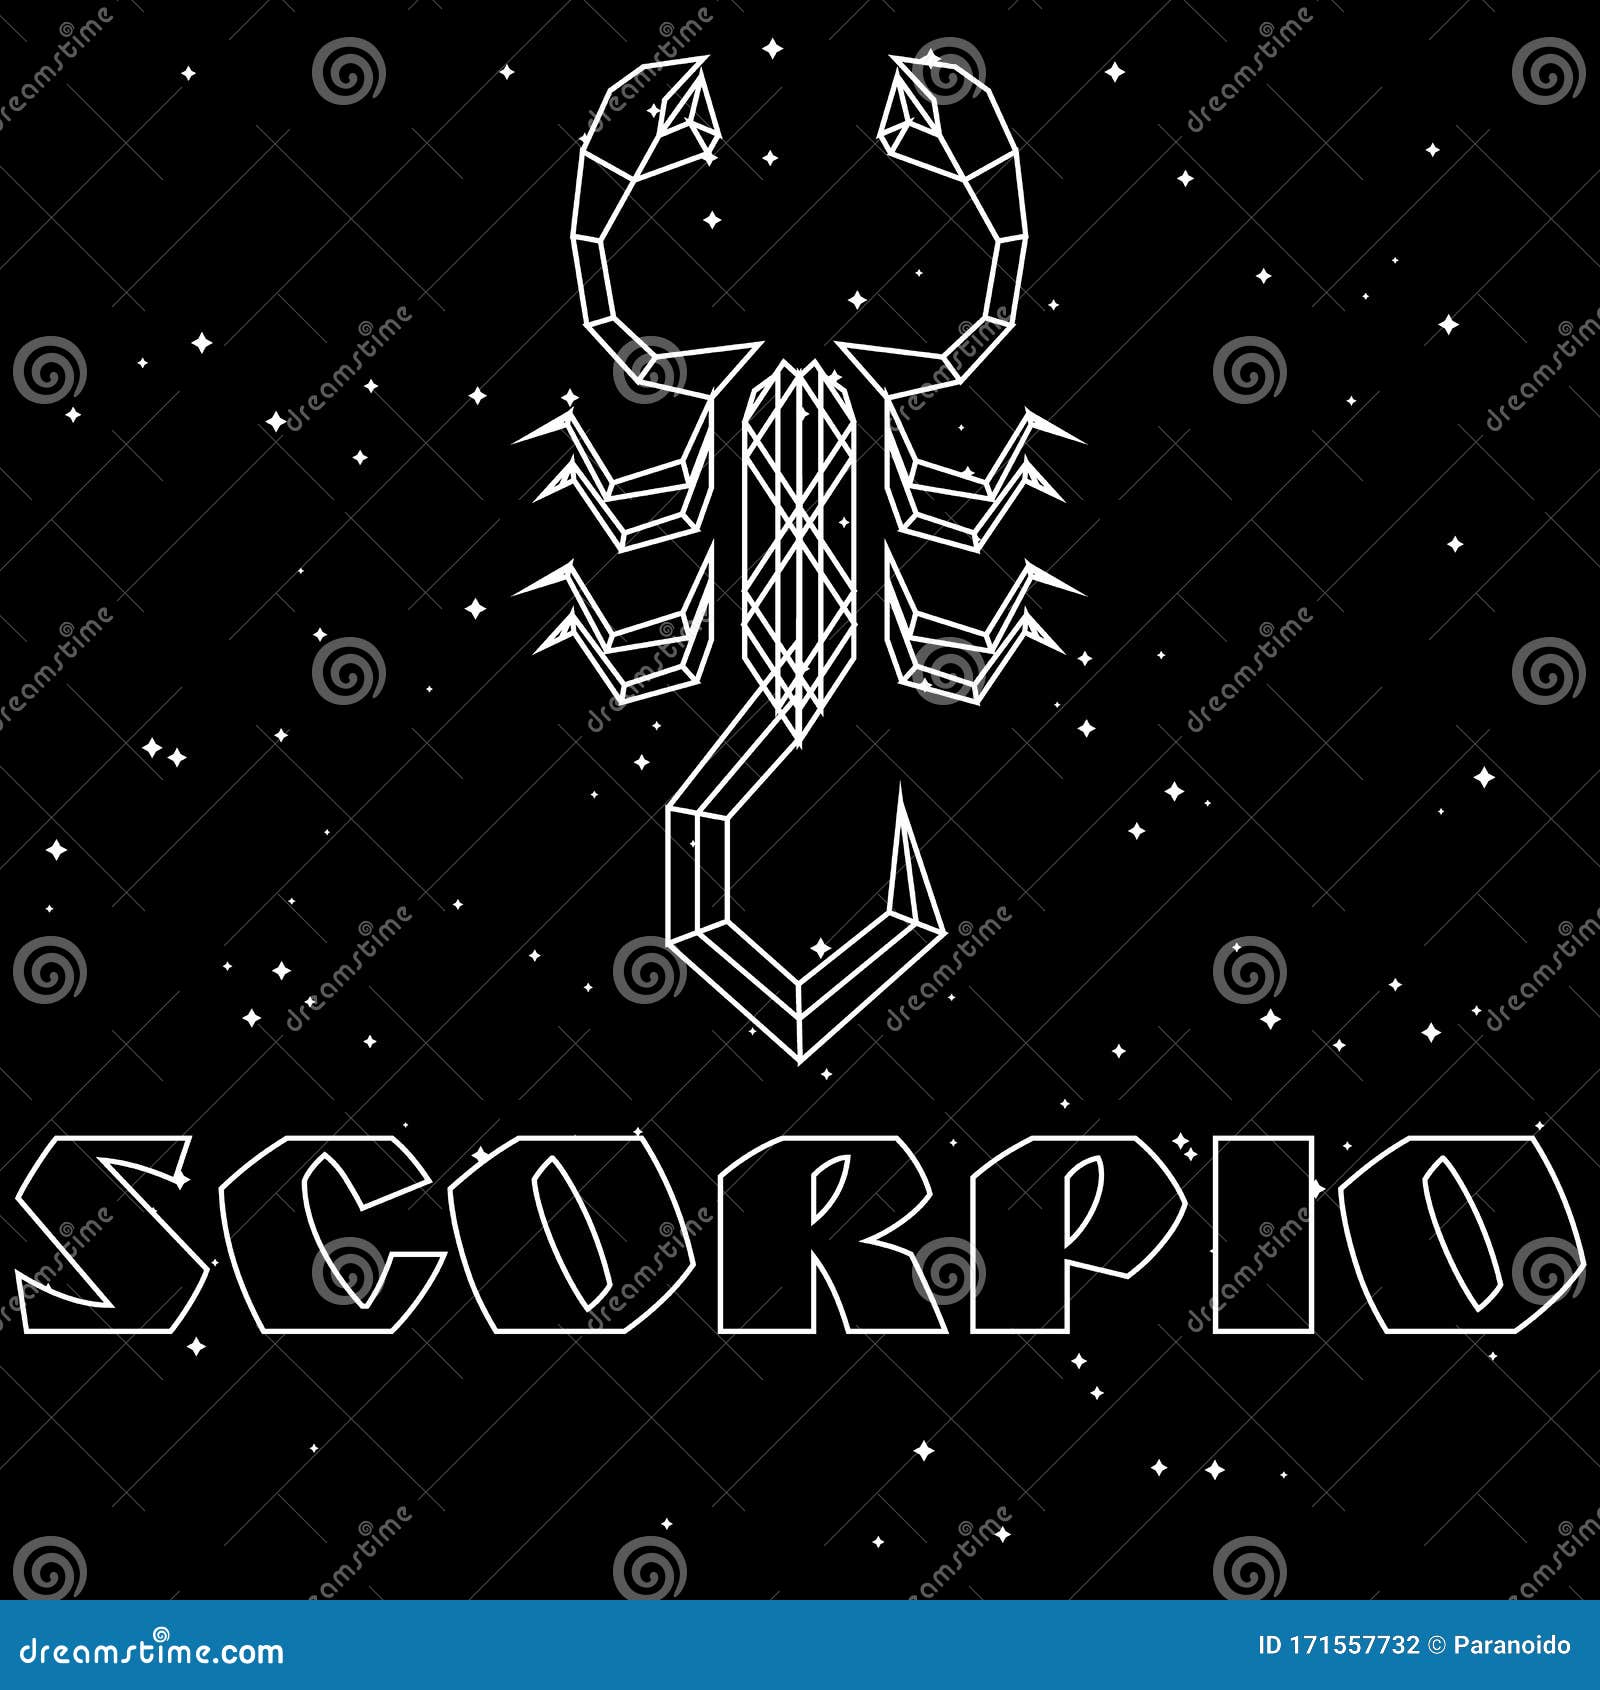 Abstract Polygonal Zodiac Sign Scorpio on Black Starry Sky Background ...